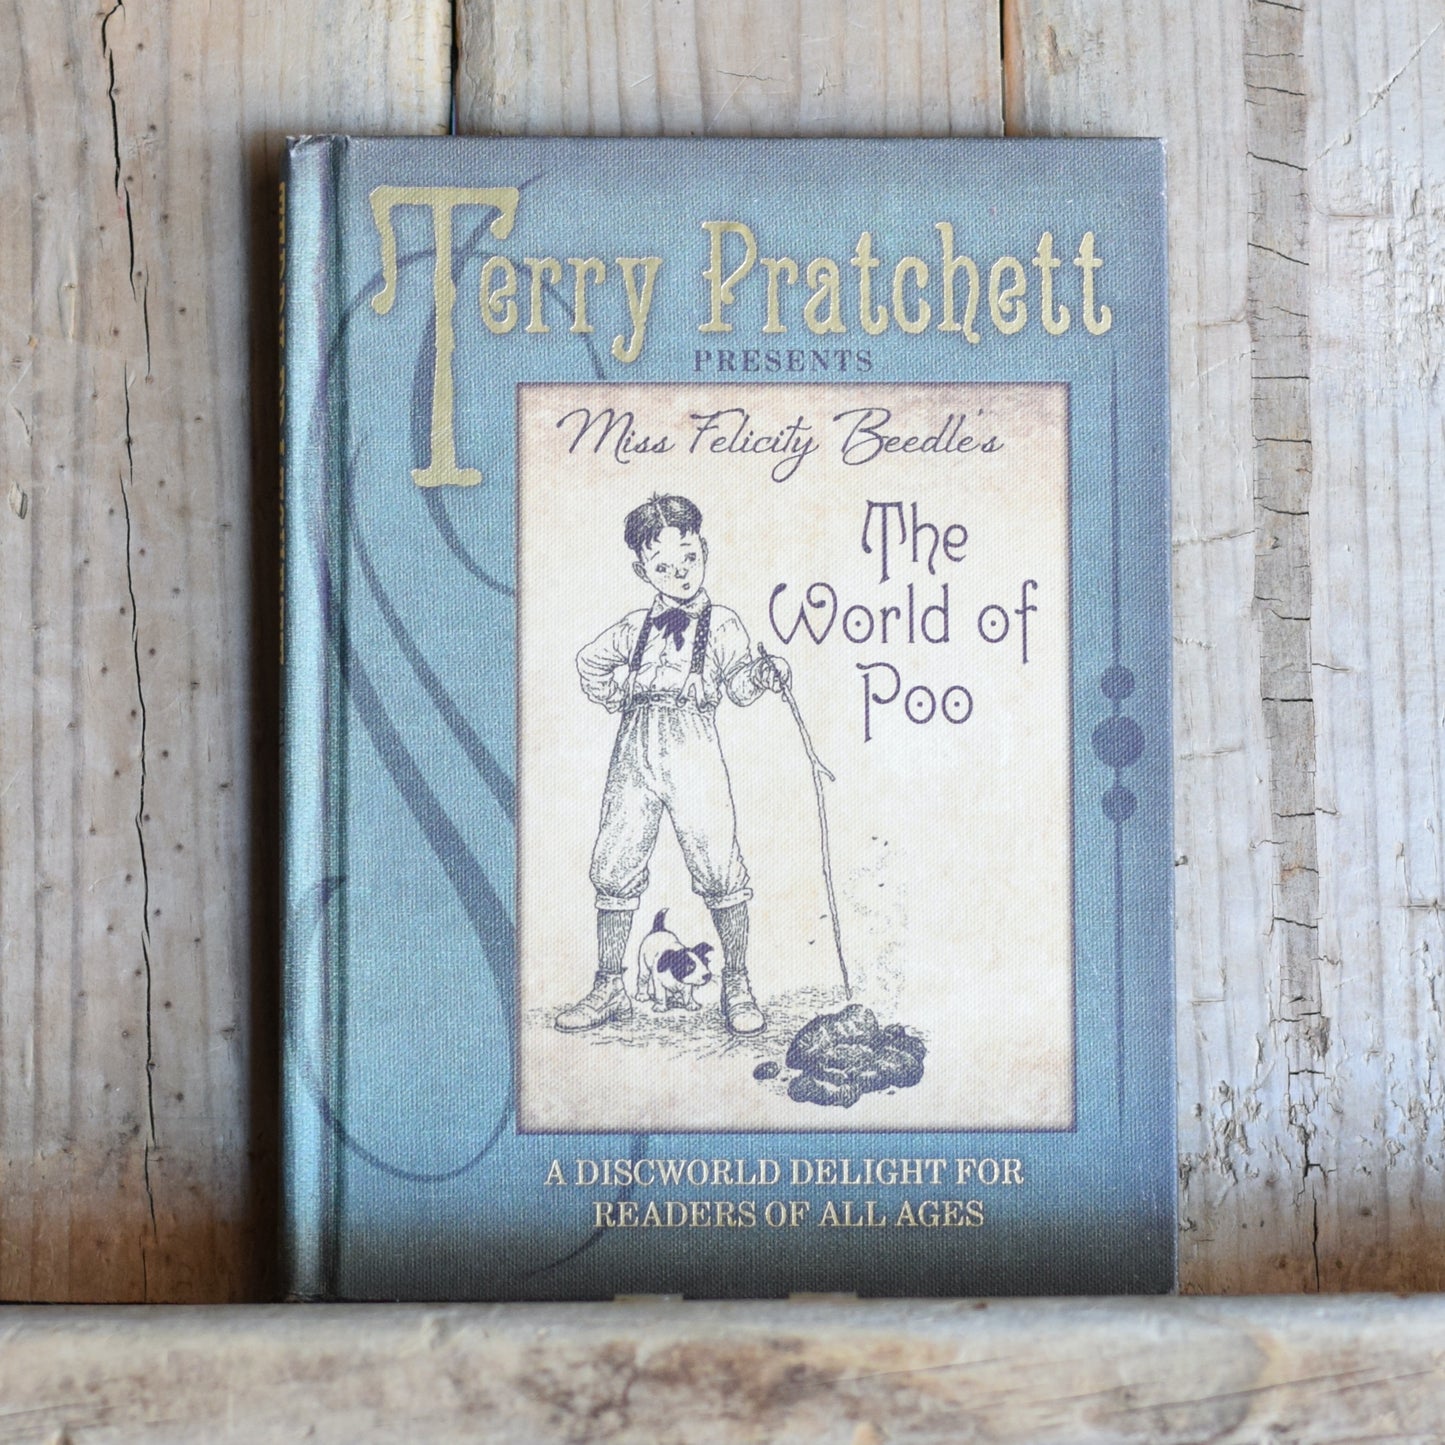 Fantasy Hardback: Terry Pratchett - Miss Felicity Beedle's The World of Poo FIRST EDITION/PRINTING